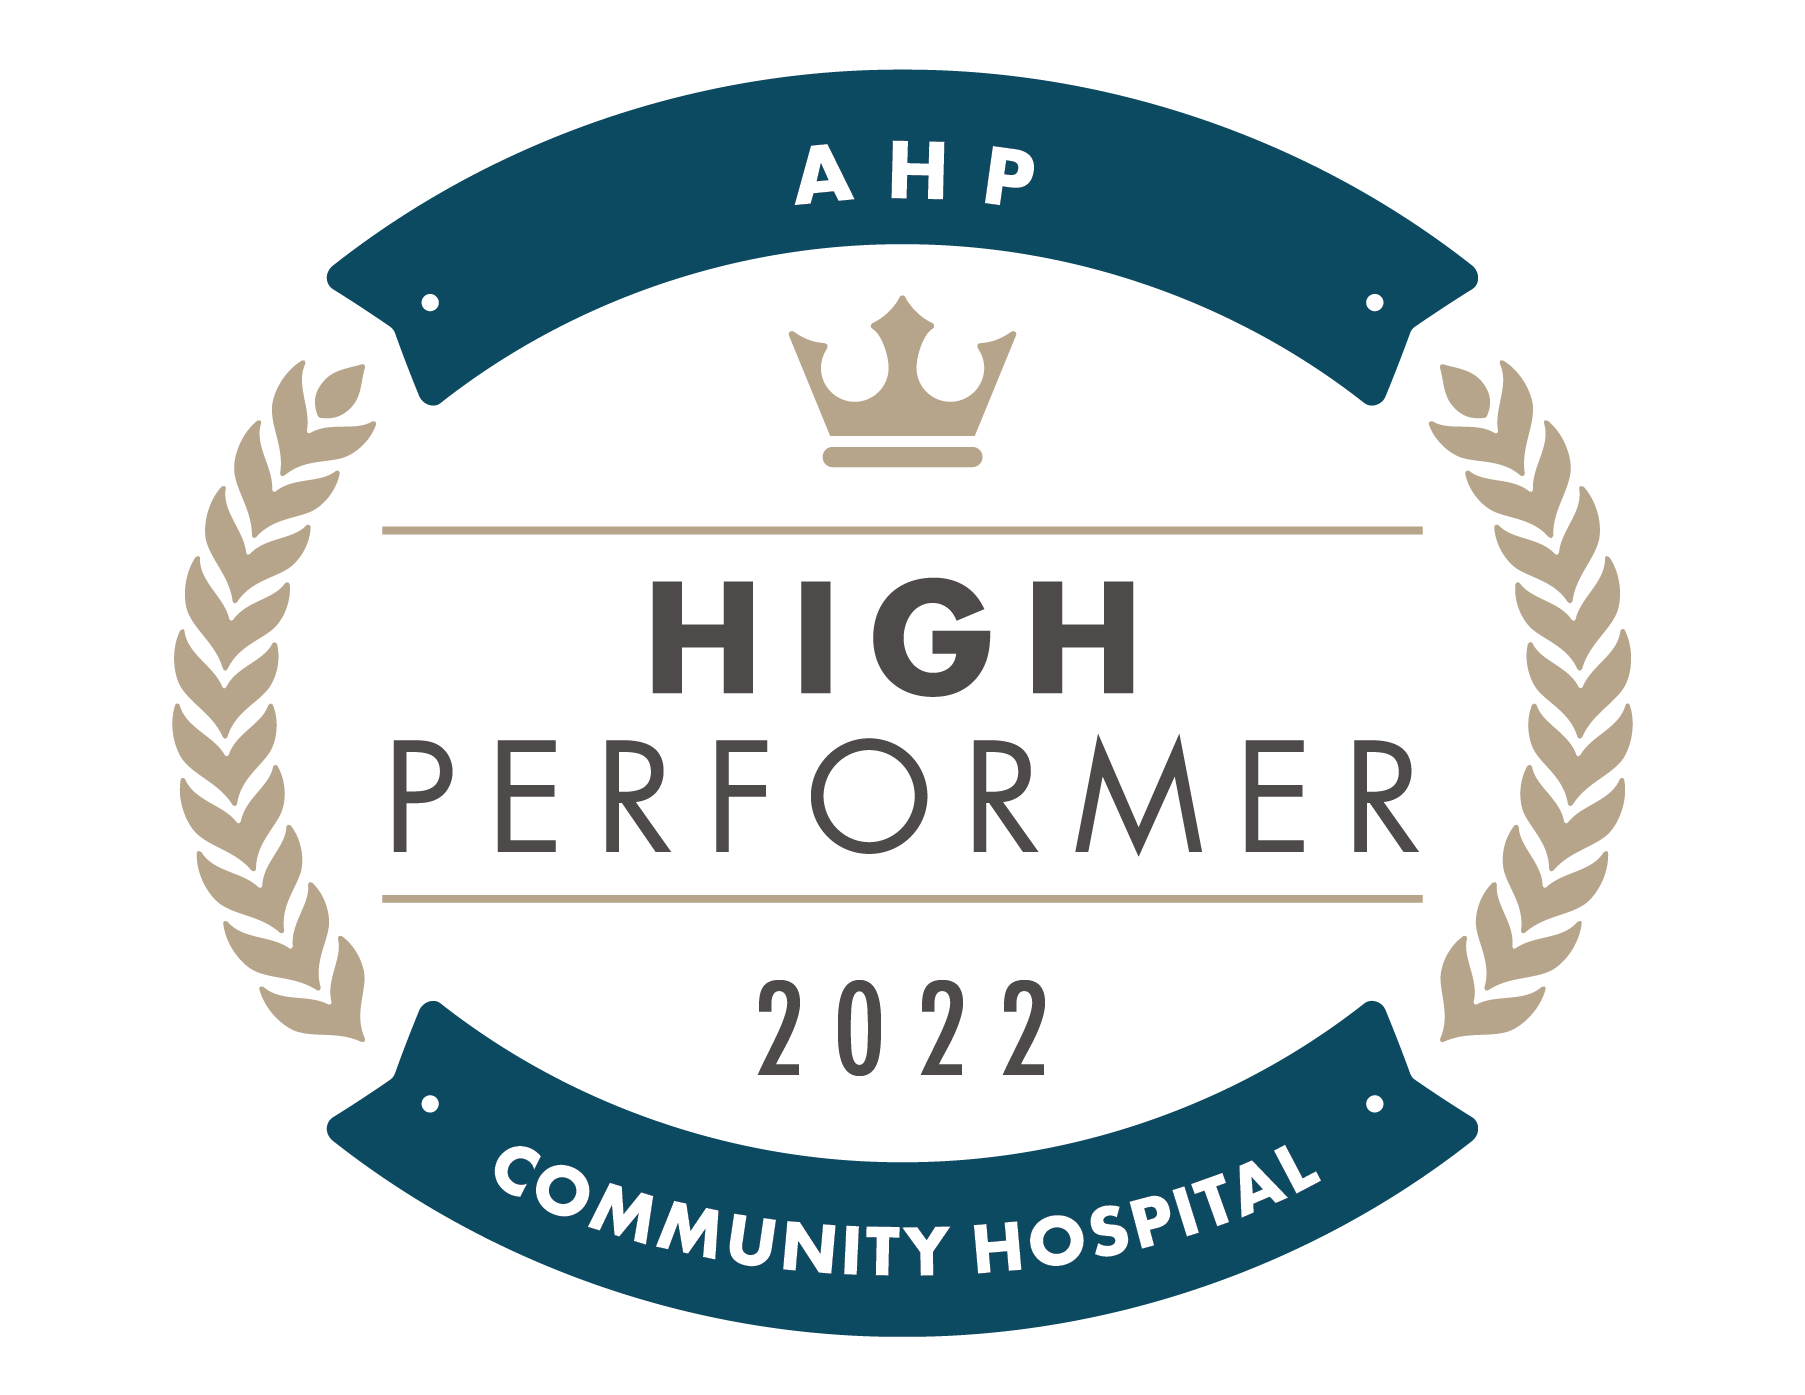 AHP High Performer 2022